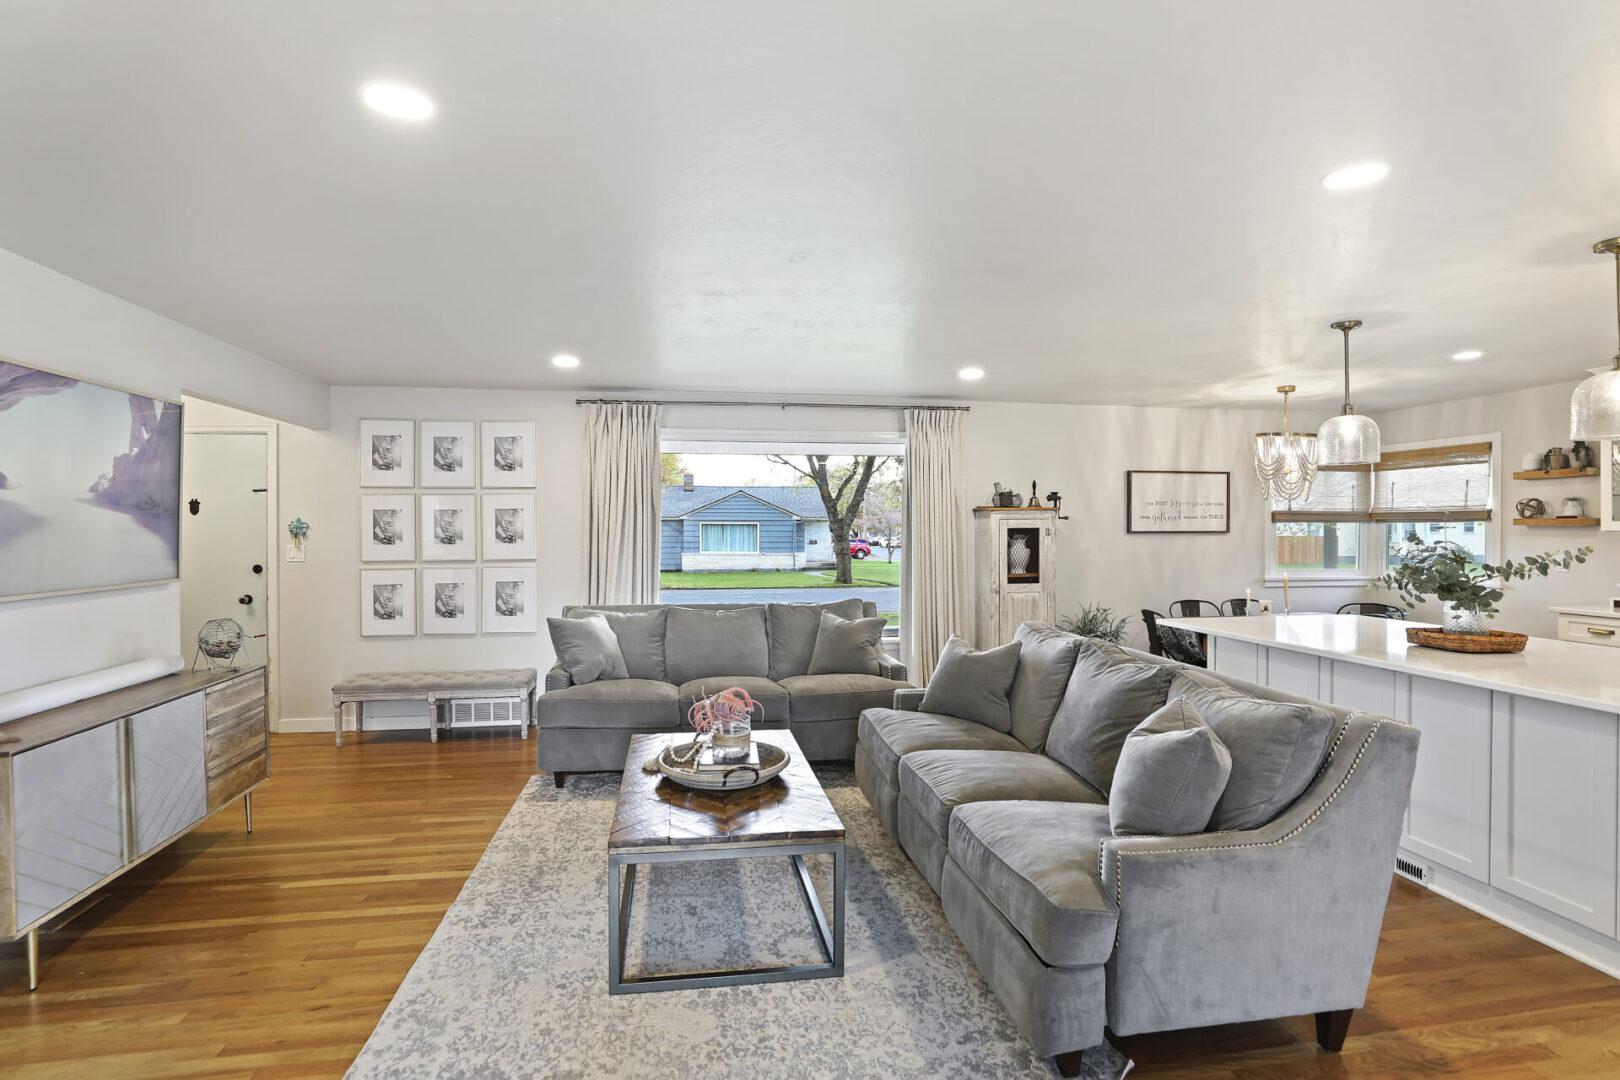 A living room with a gray sofa set